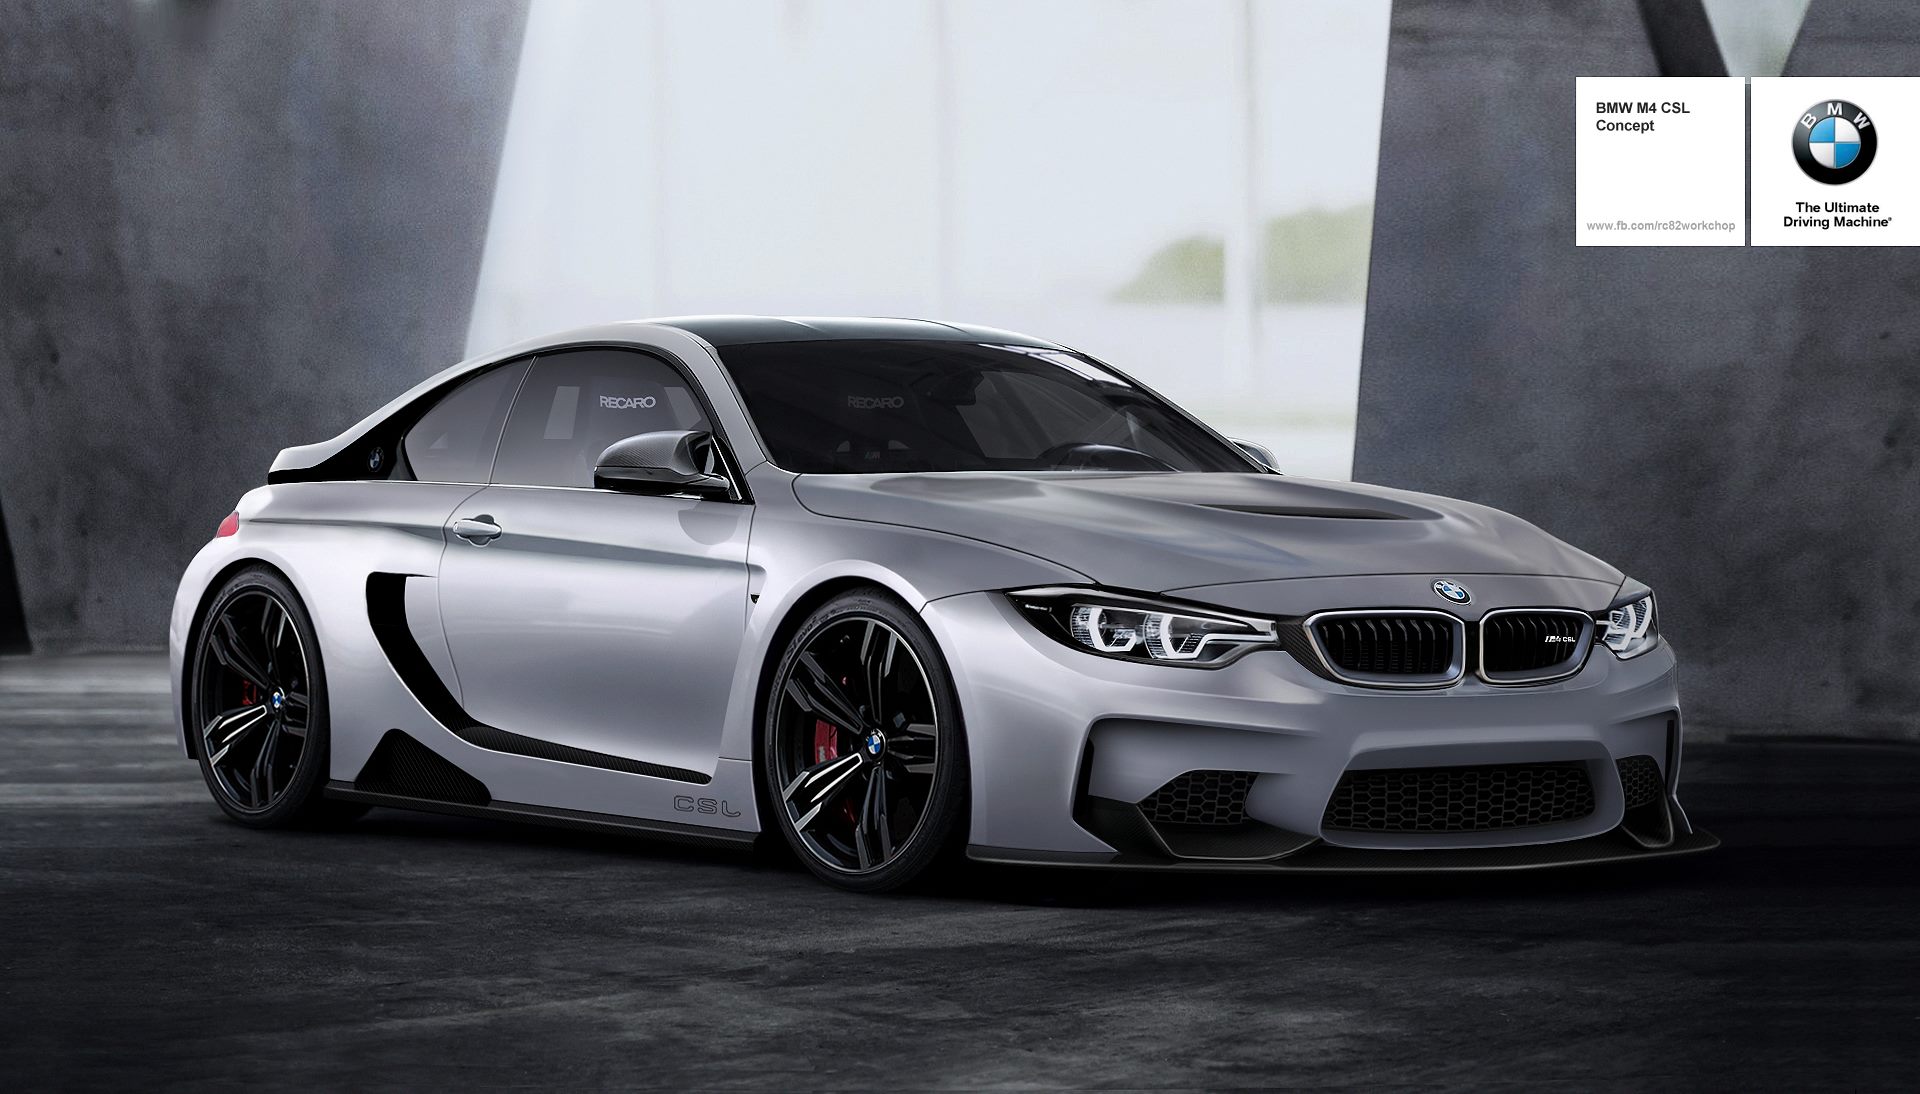 BMW-M4-GTS-F82-BMW-M4-CSL-Concept-rc82-w